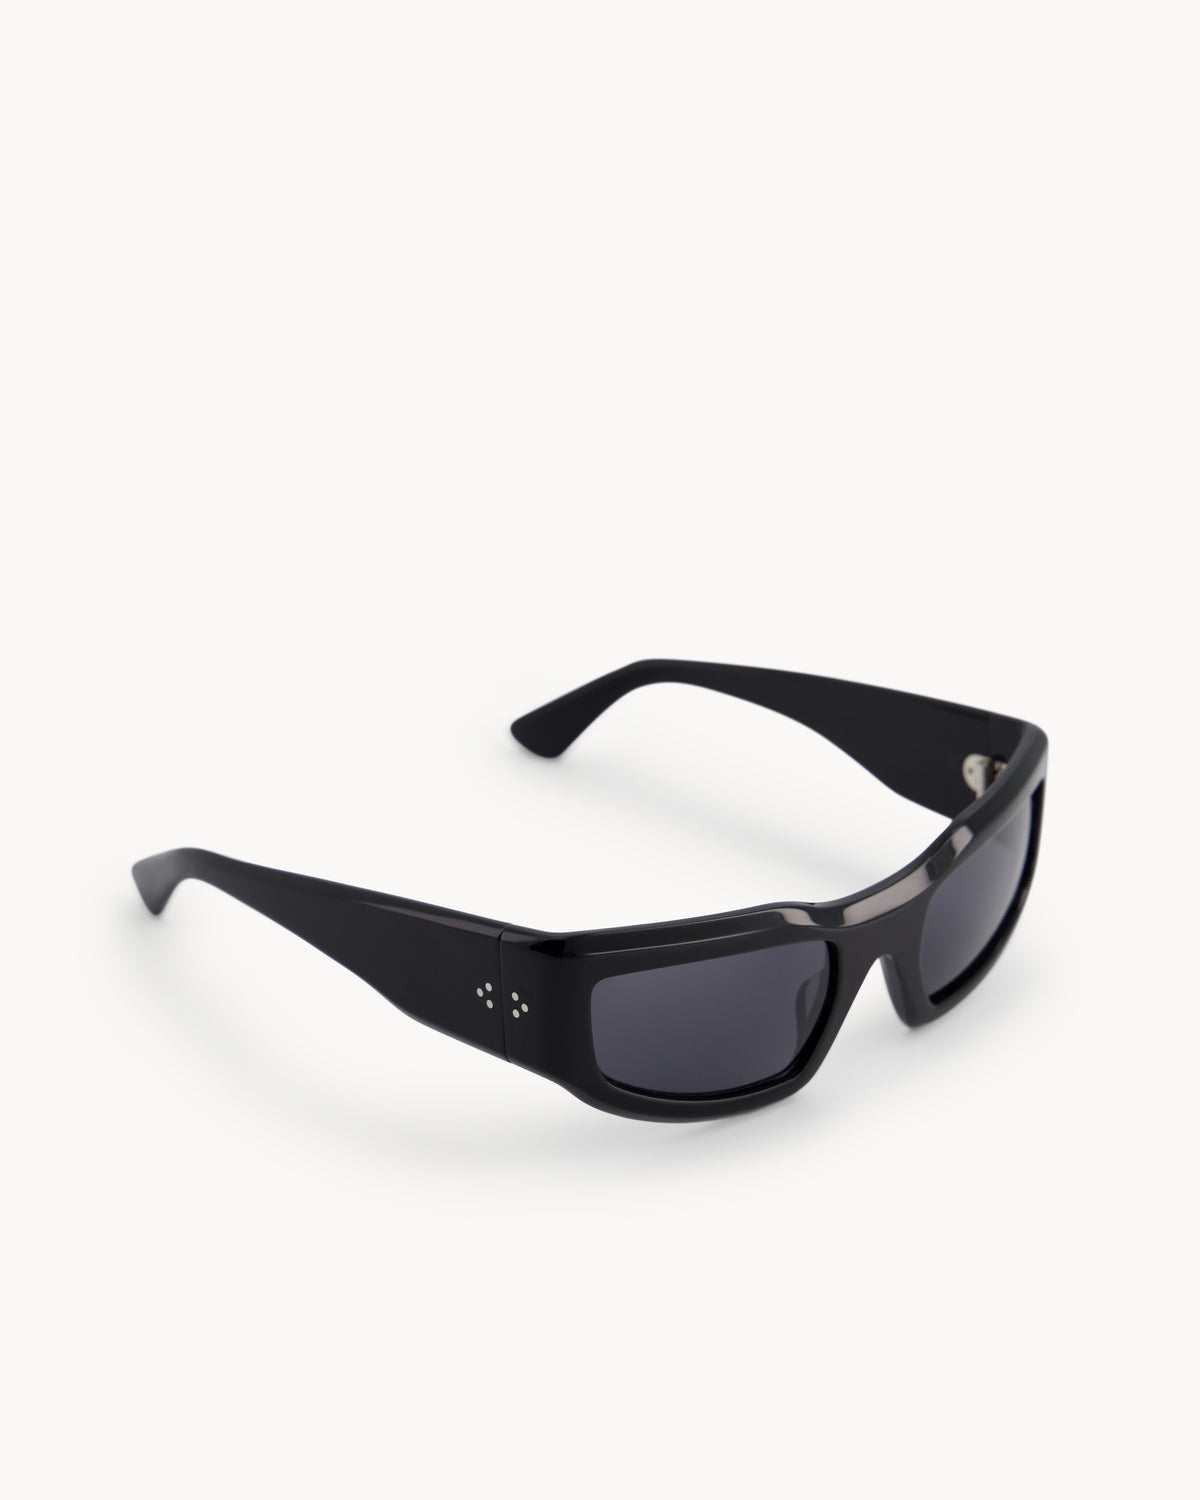 Port Tanger Andalucia Sunglasses in Black Acetate and Black Lenses 2